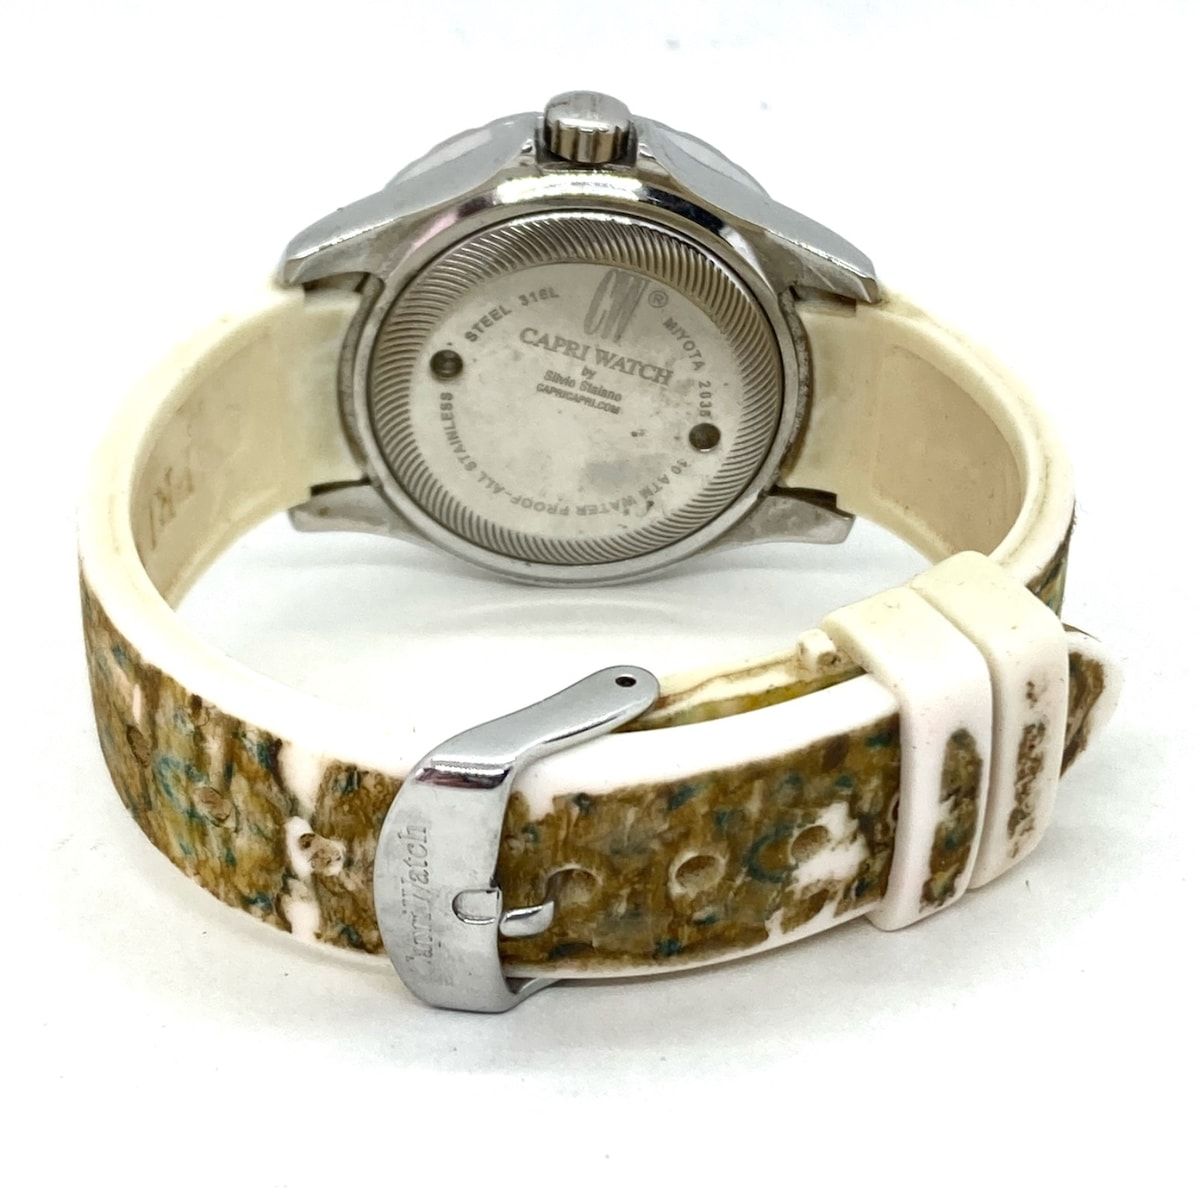 Capri WATCH(カプリウォッチ) 腕時計 - 316L レディース ラインストーンベゼル 白×ダークイエロー×マルチ